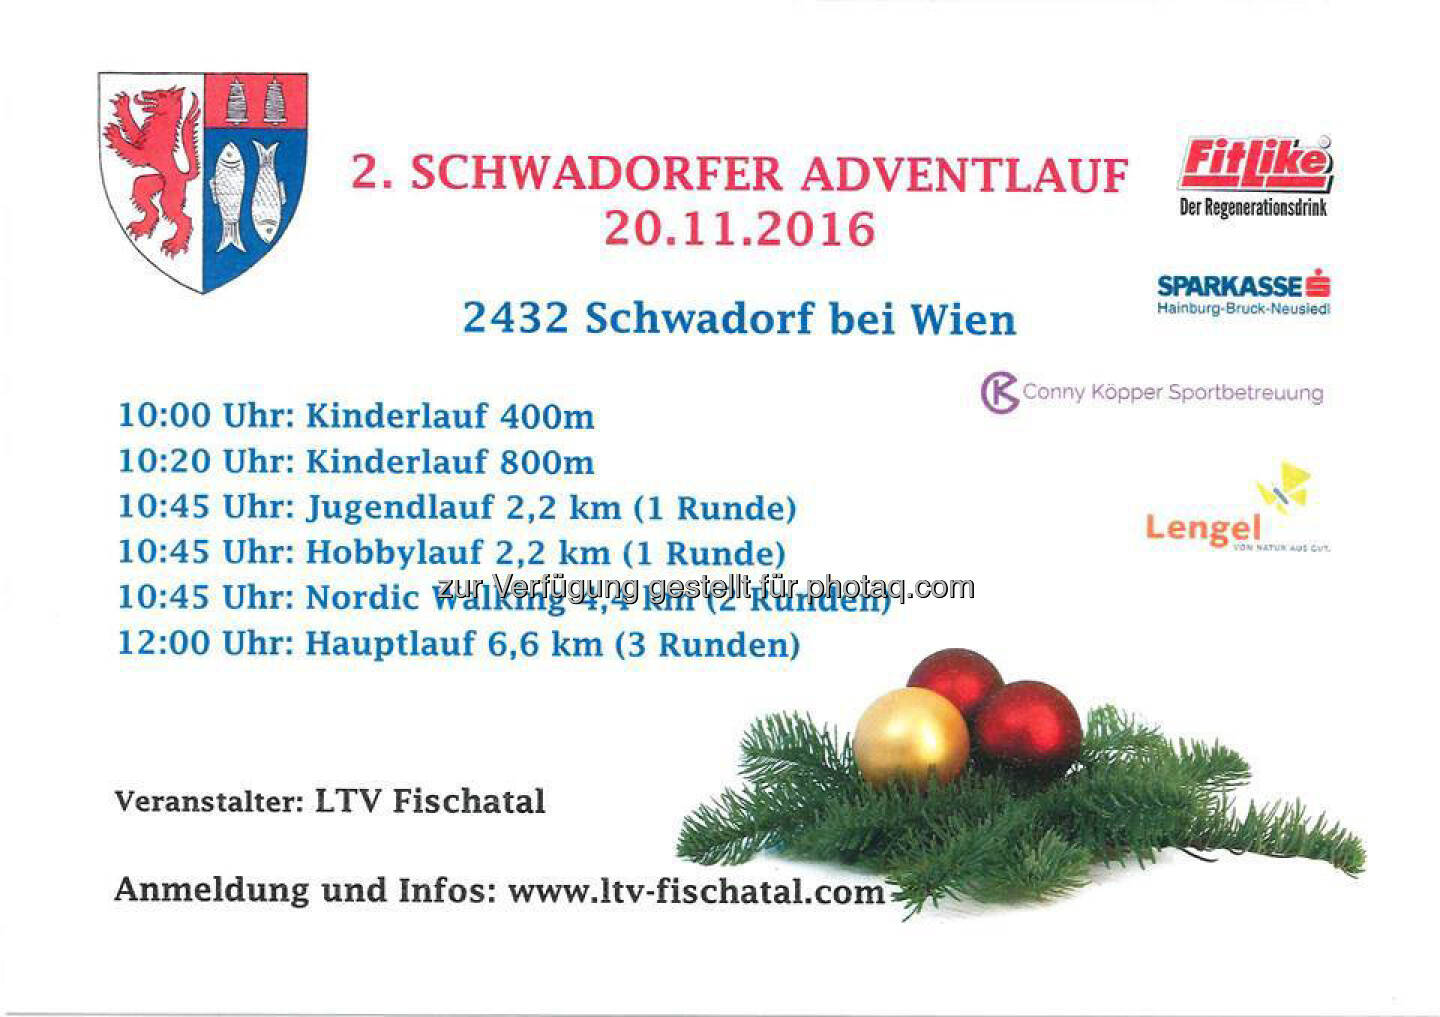 Schwadorfer Adventlauf